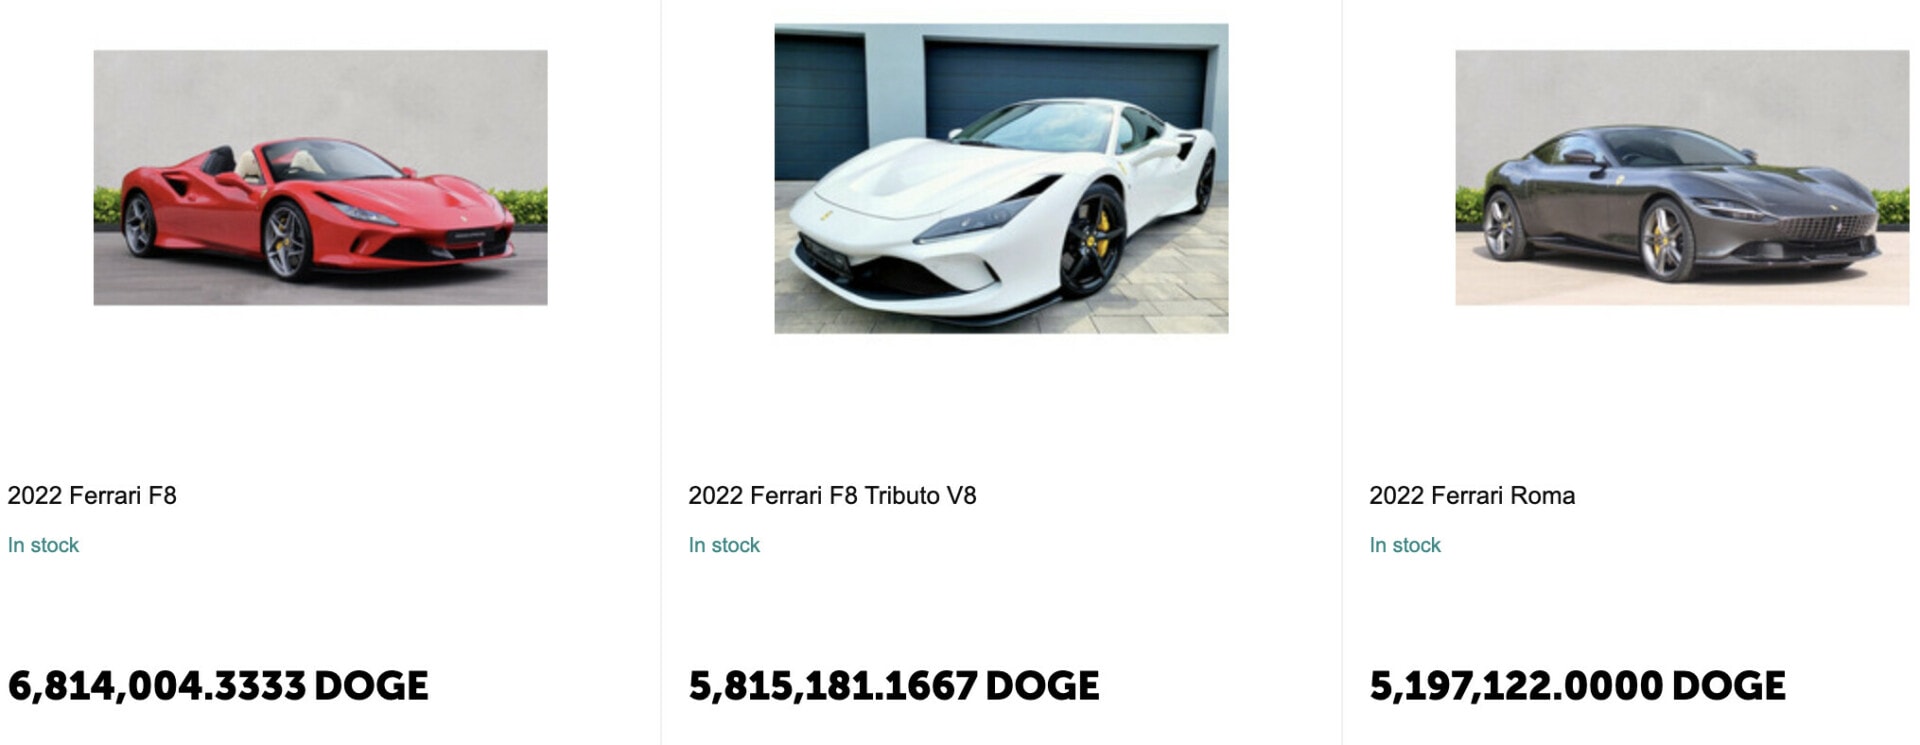 Acheter une Ferrari avec du Dogecoin